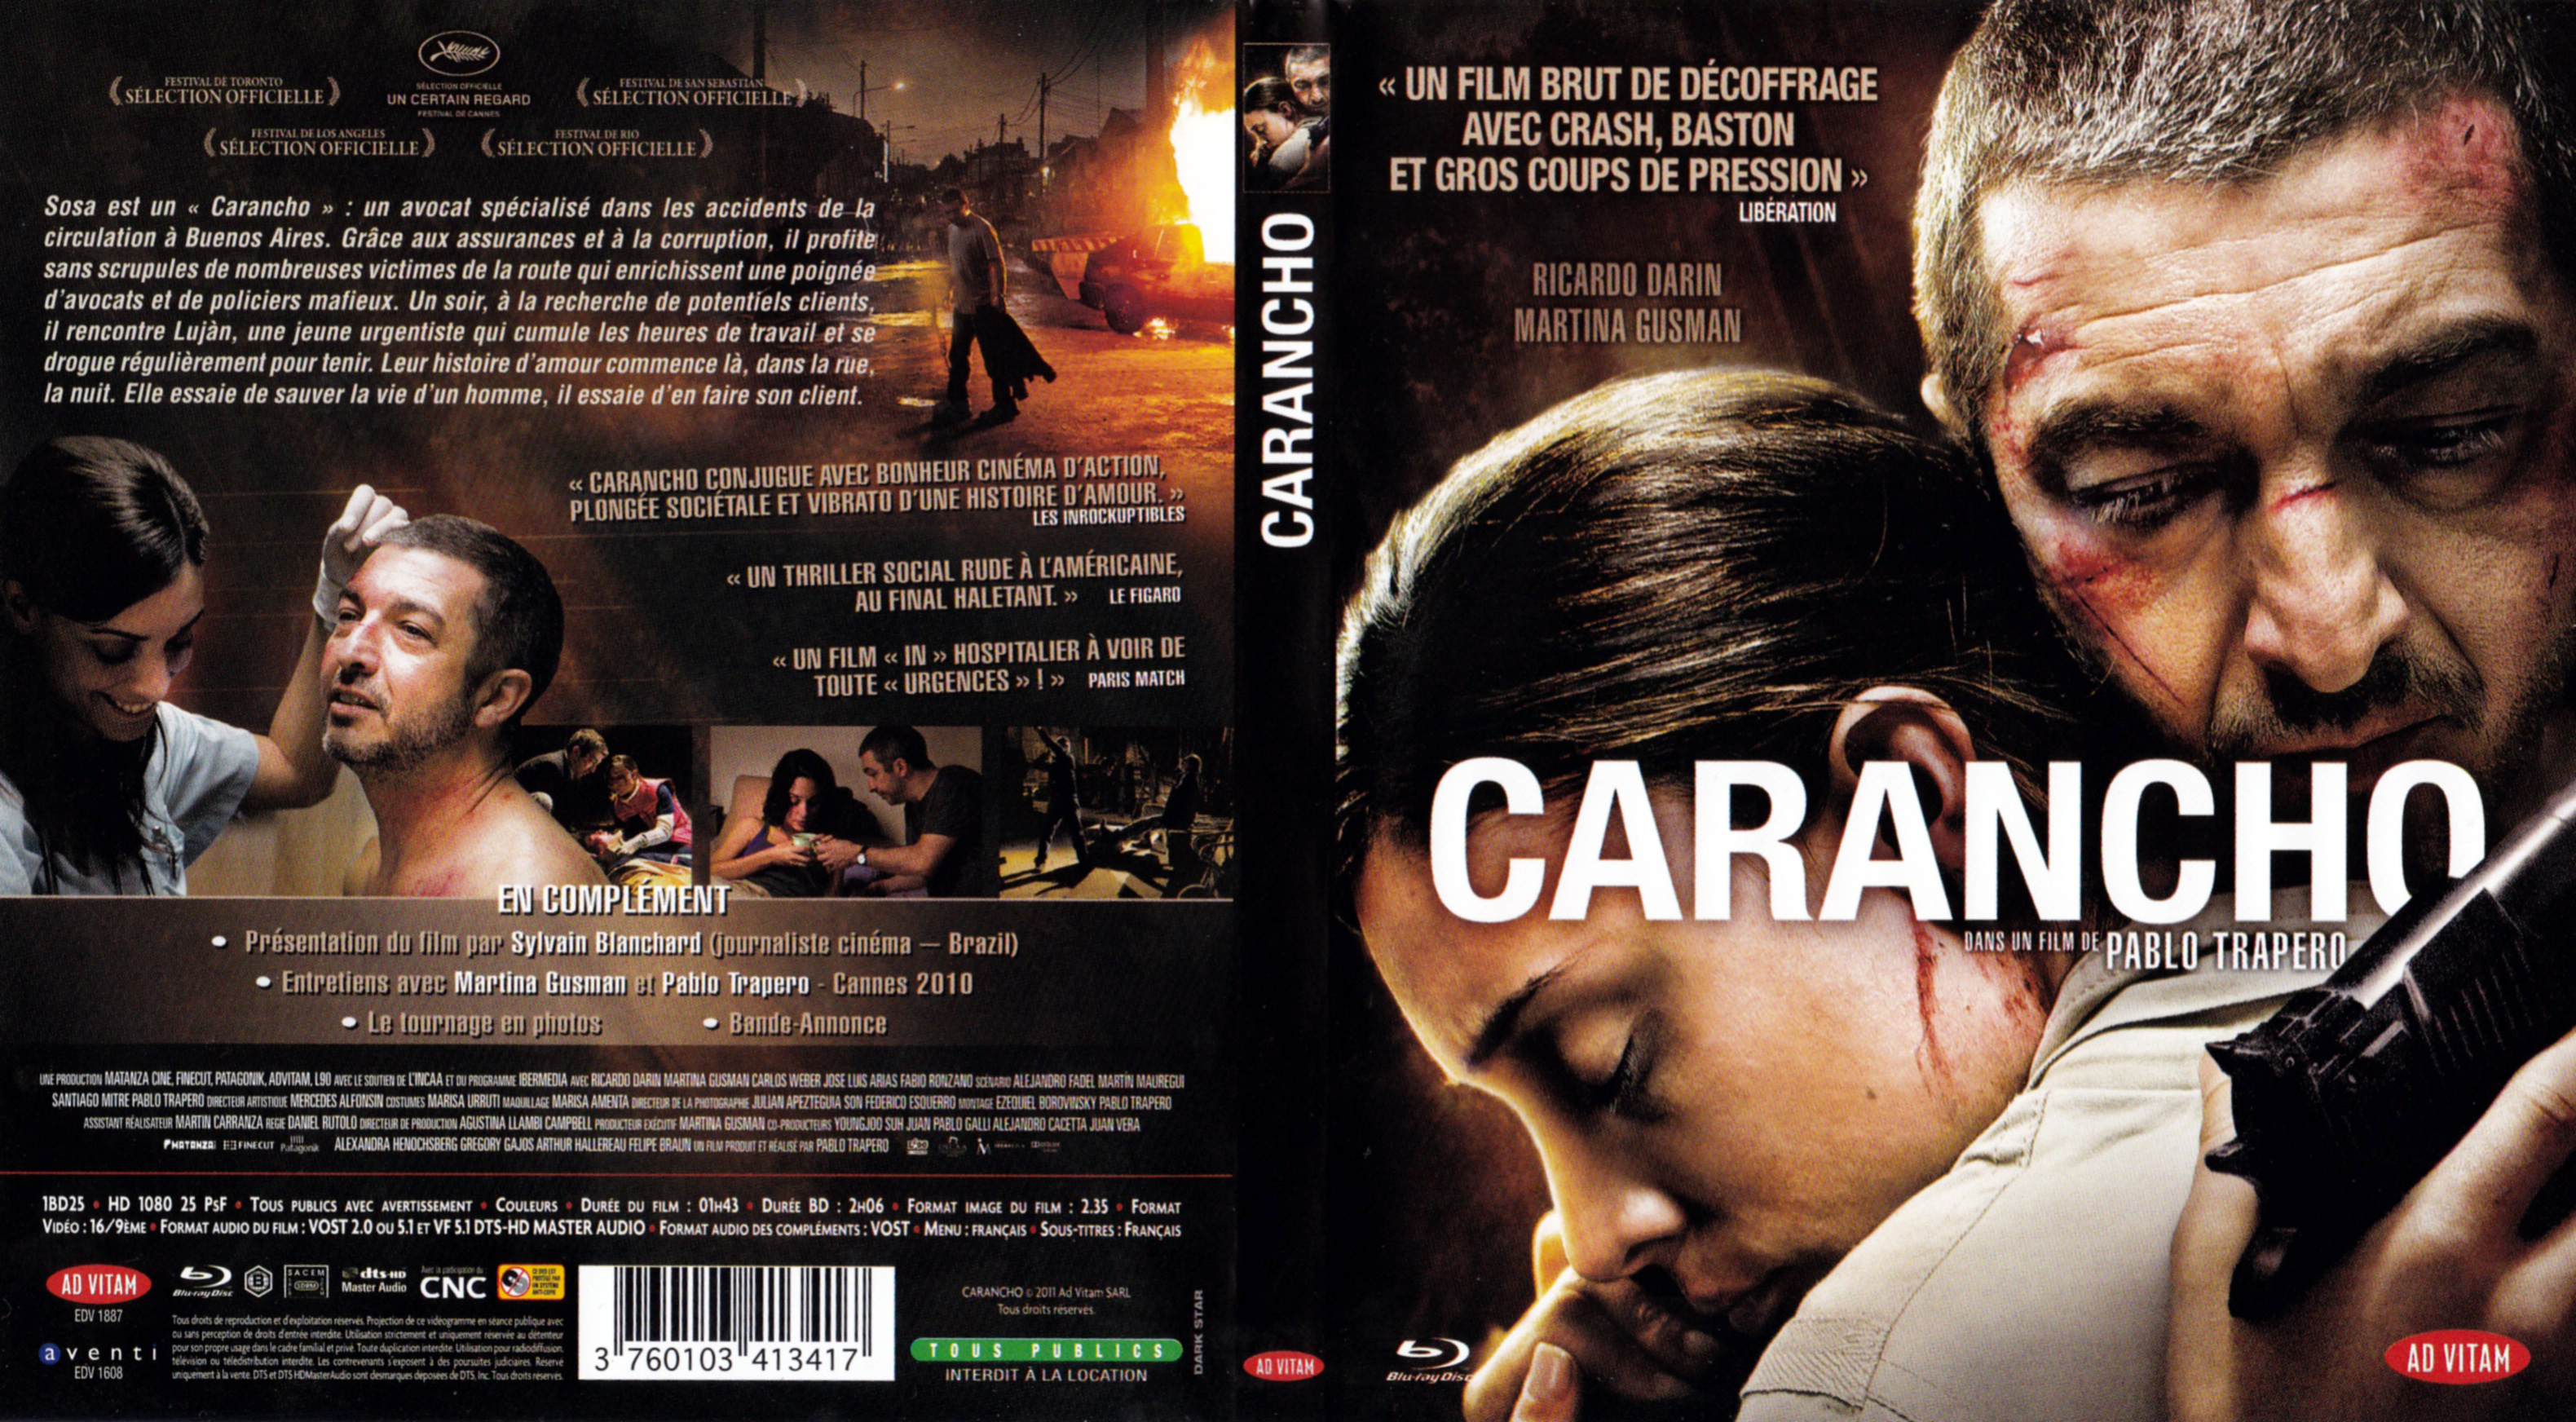 Jaquette DVD Carancho (BLU-RAY)